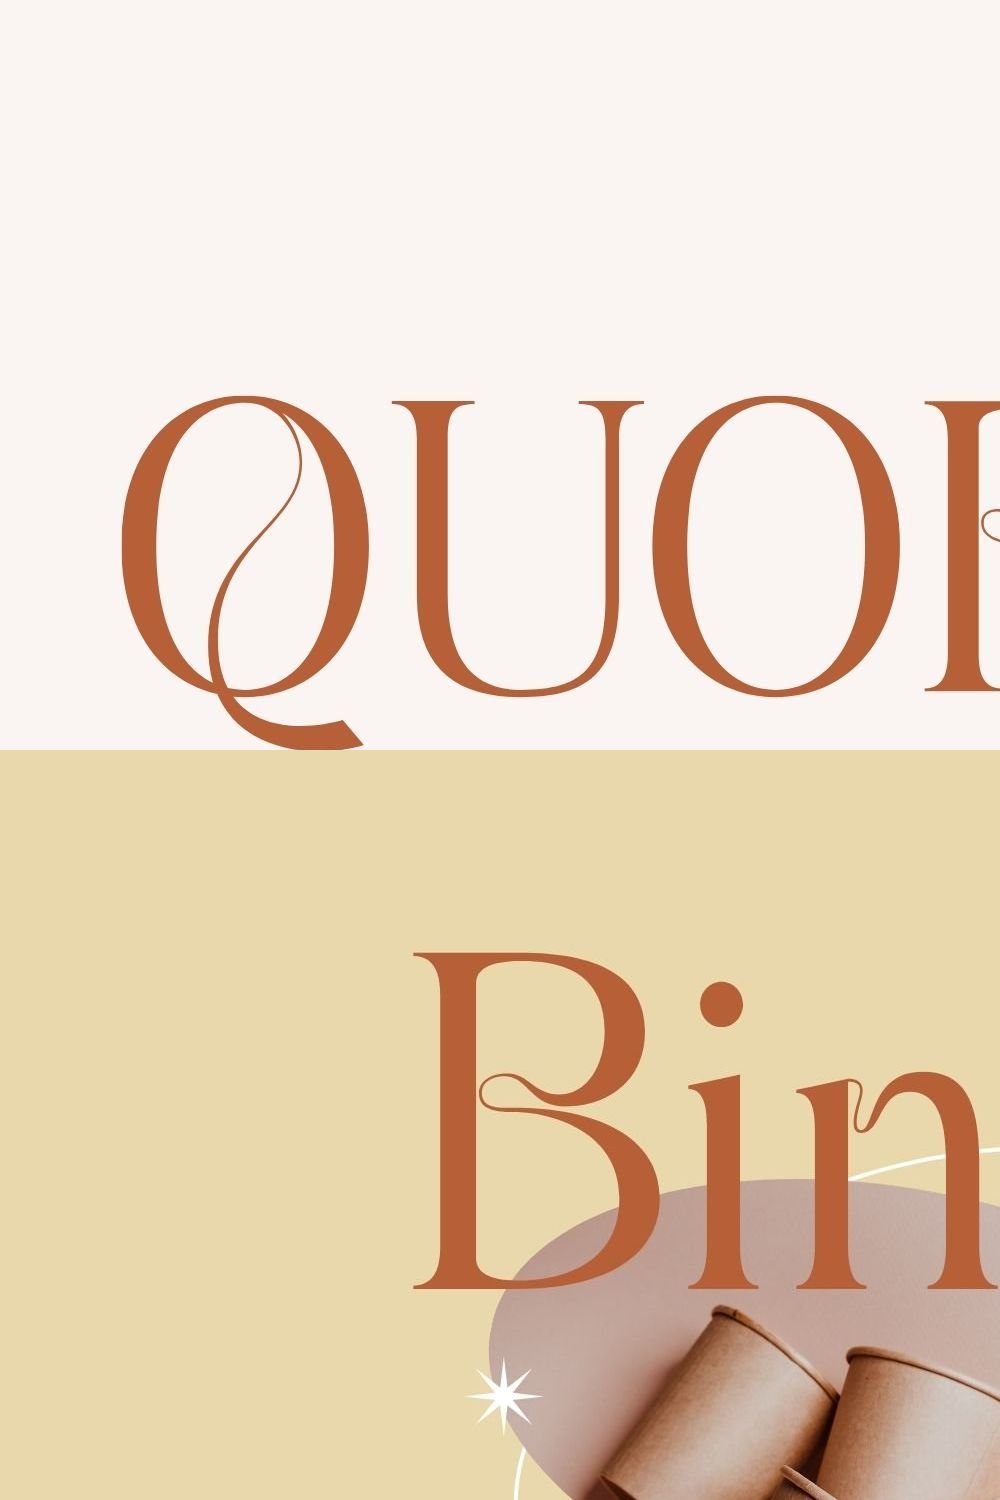 Quorga - Modern Serif pinterest preview image.